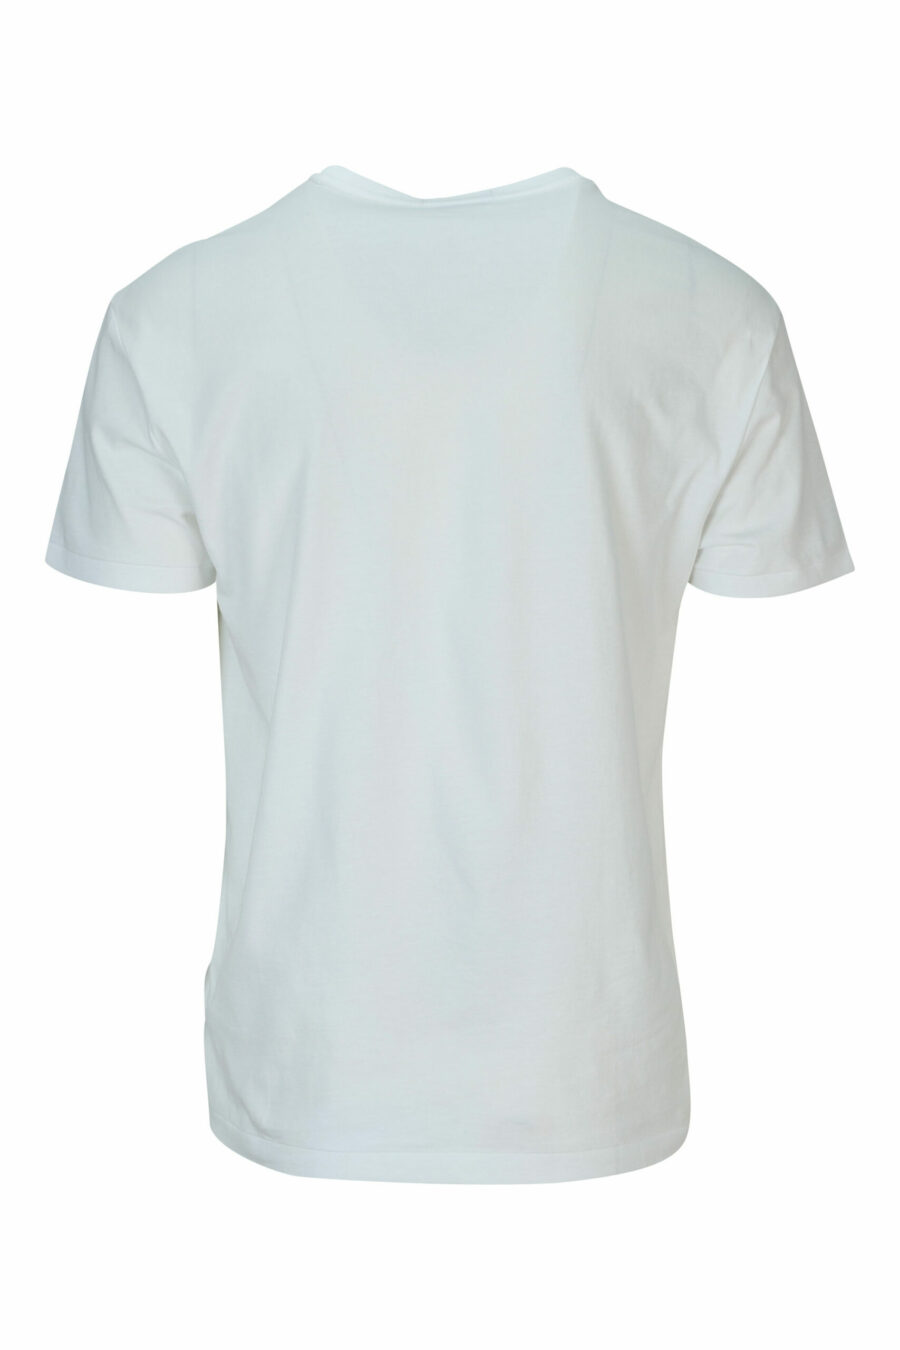 Weißes T-Shirt mit schwarzem "Polo"-Maxilogo - 3616536391115 1 skaliert